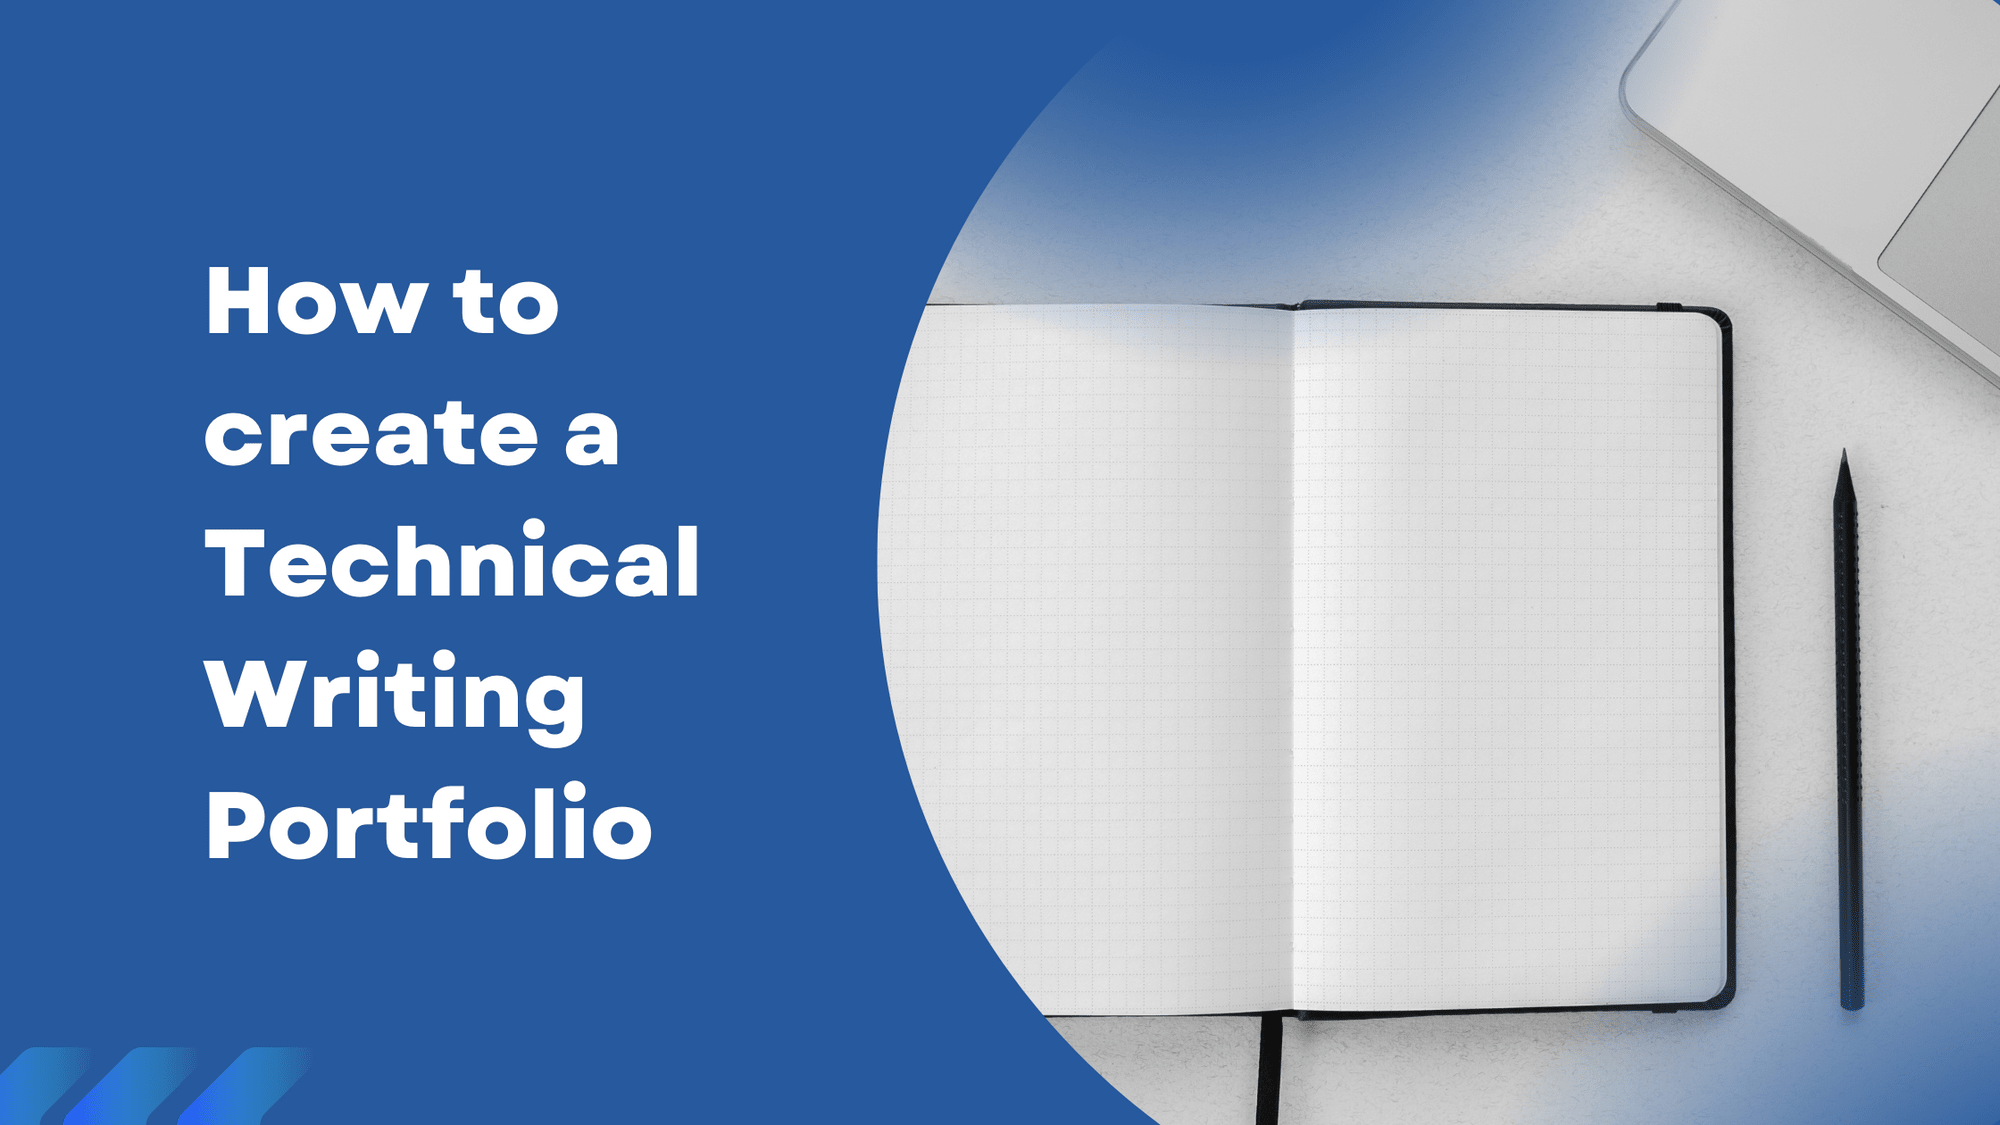 How to create a Technical Writing Portfolio